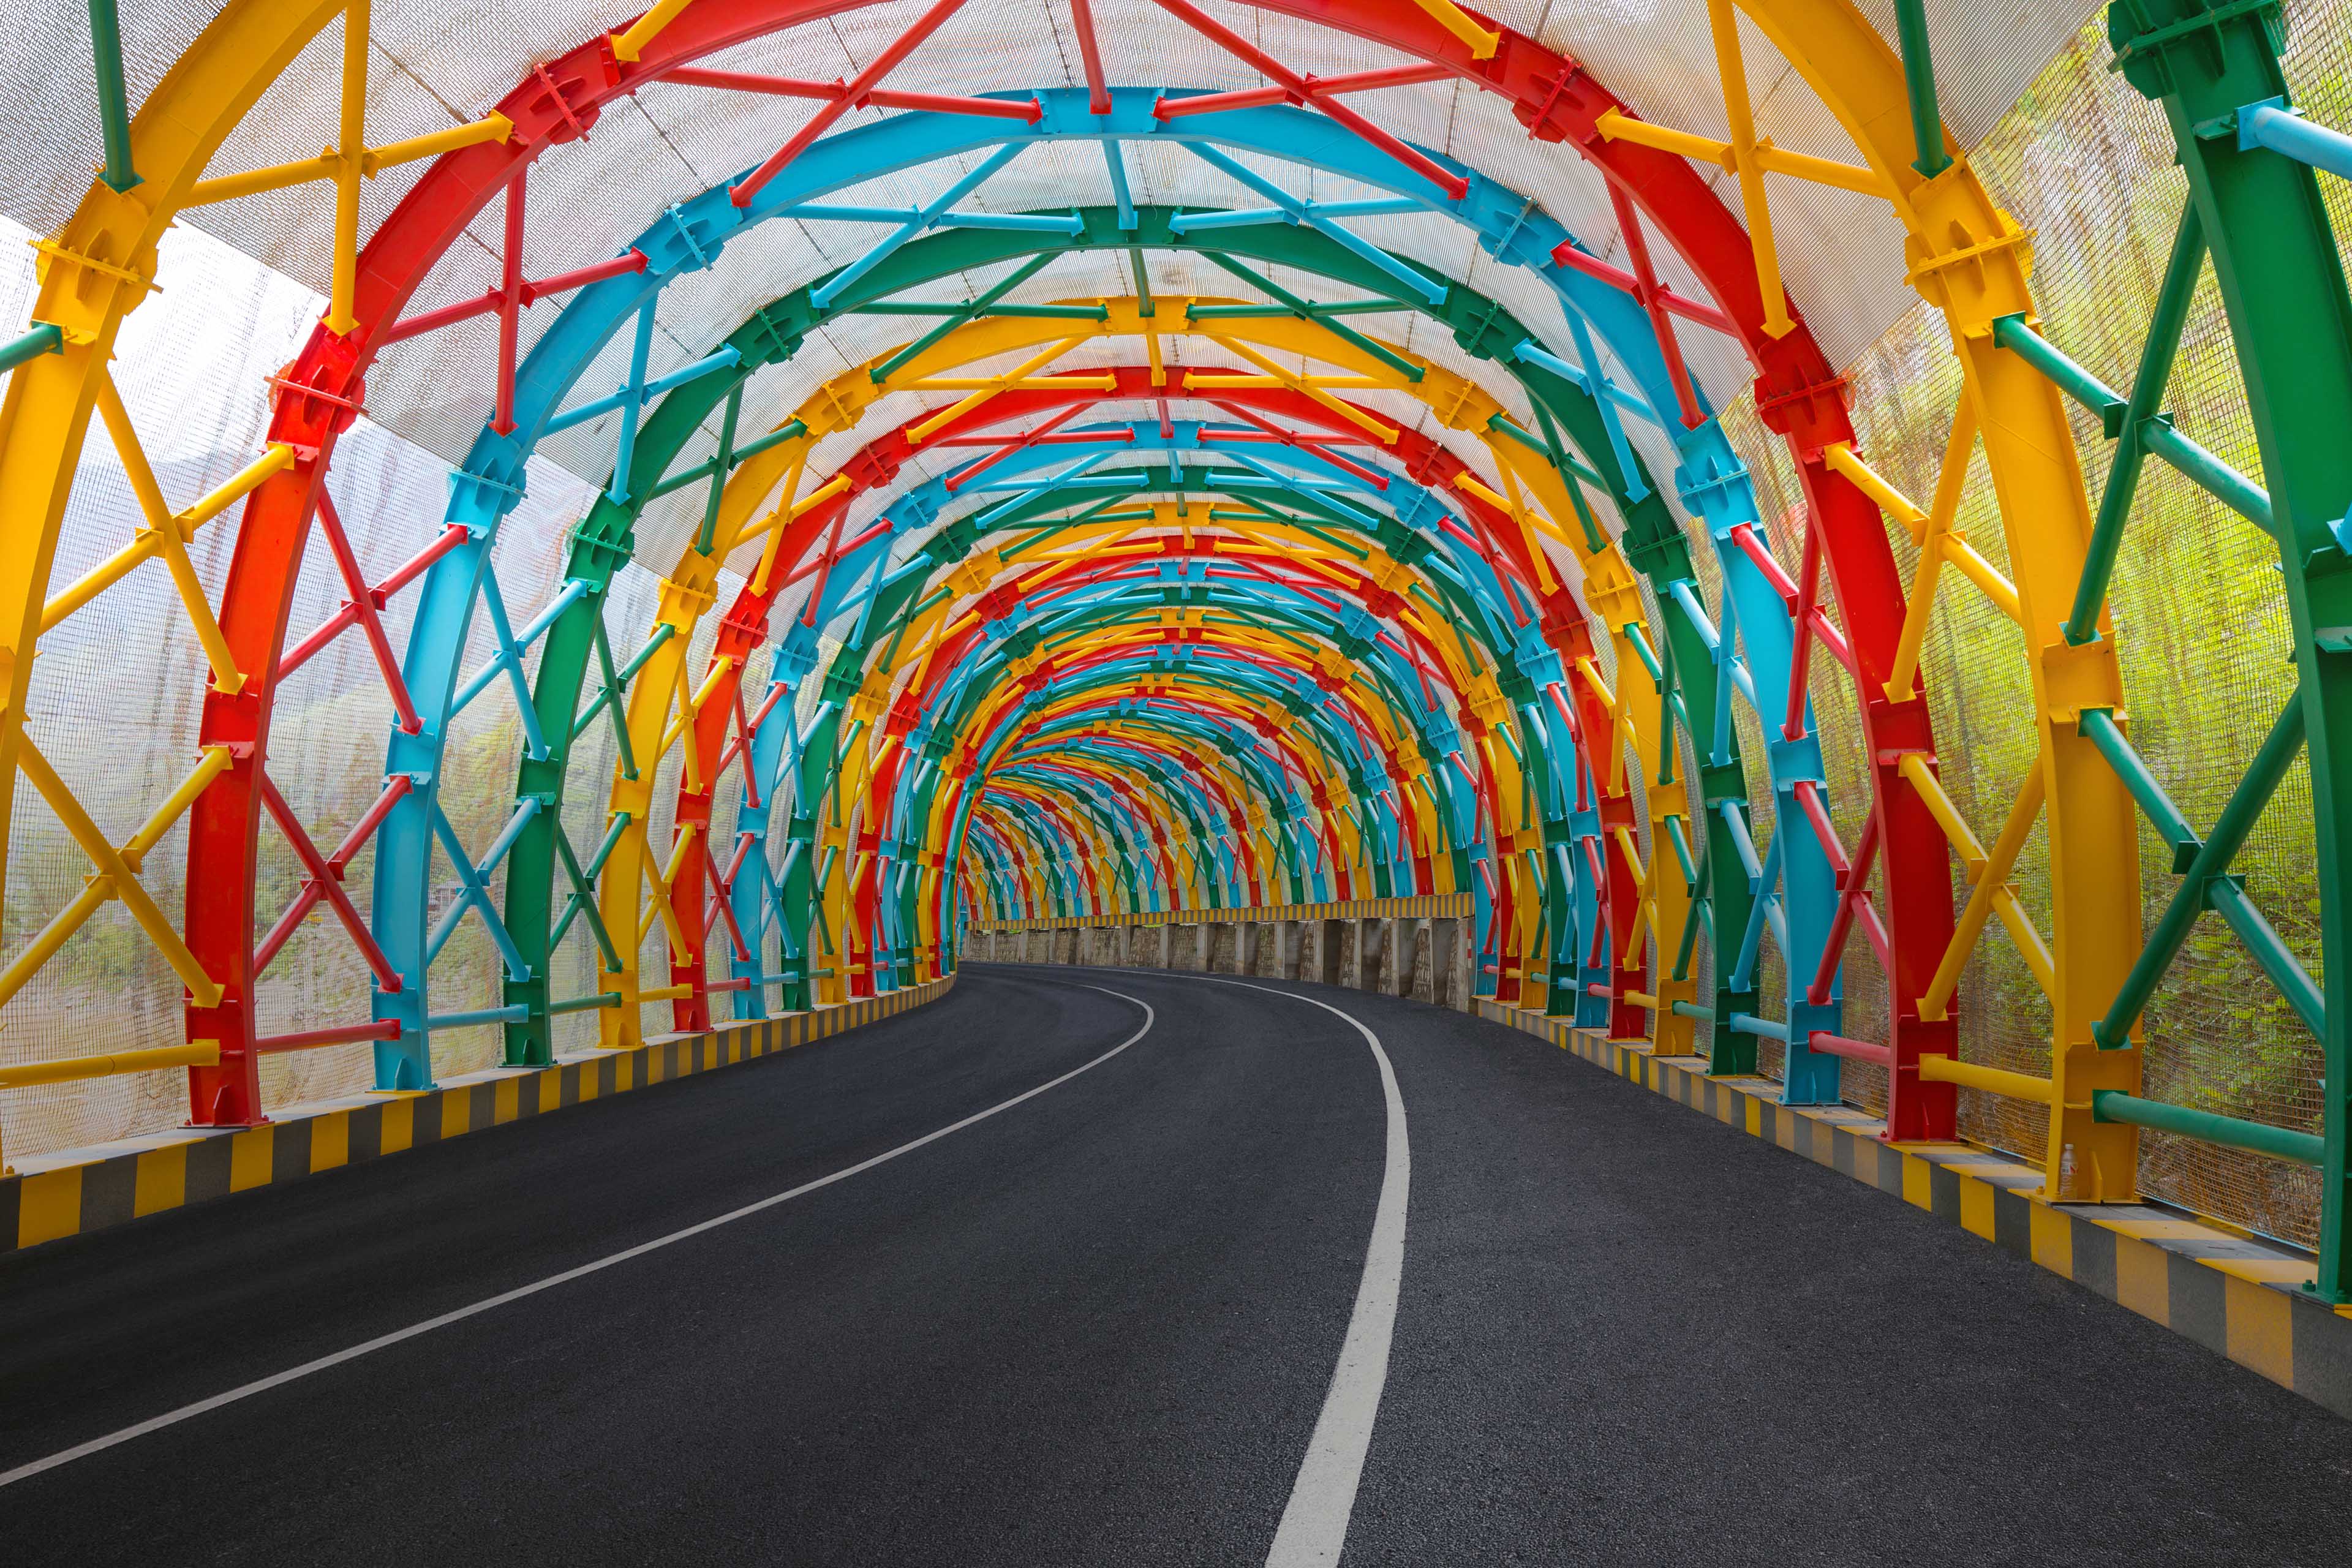 Highway with rainbow decoration